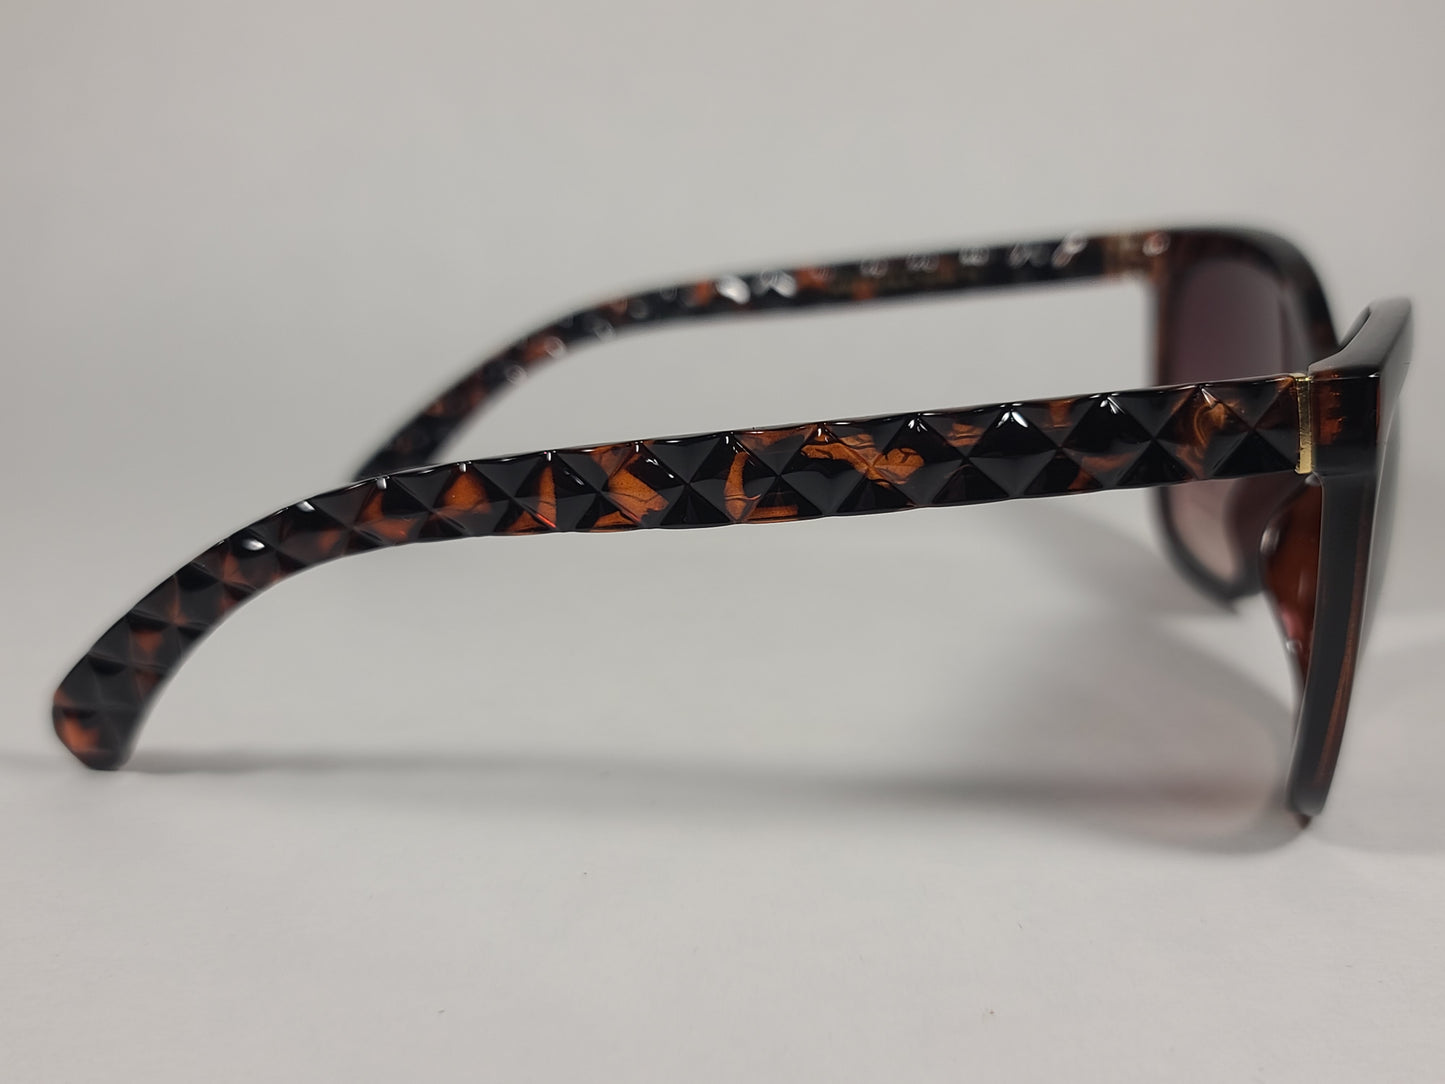 Tahari Rectangular Sunglasses Tortoise Frame Brown Gradient TH795 TS - Sunglasses